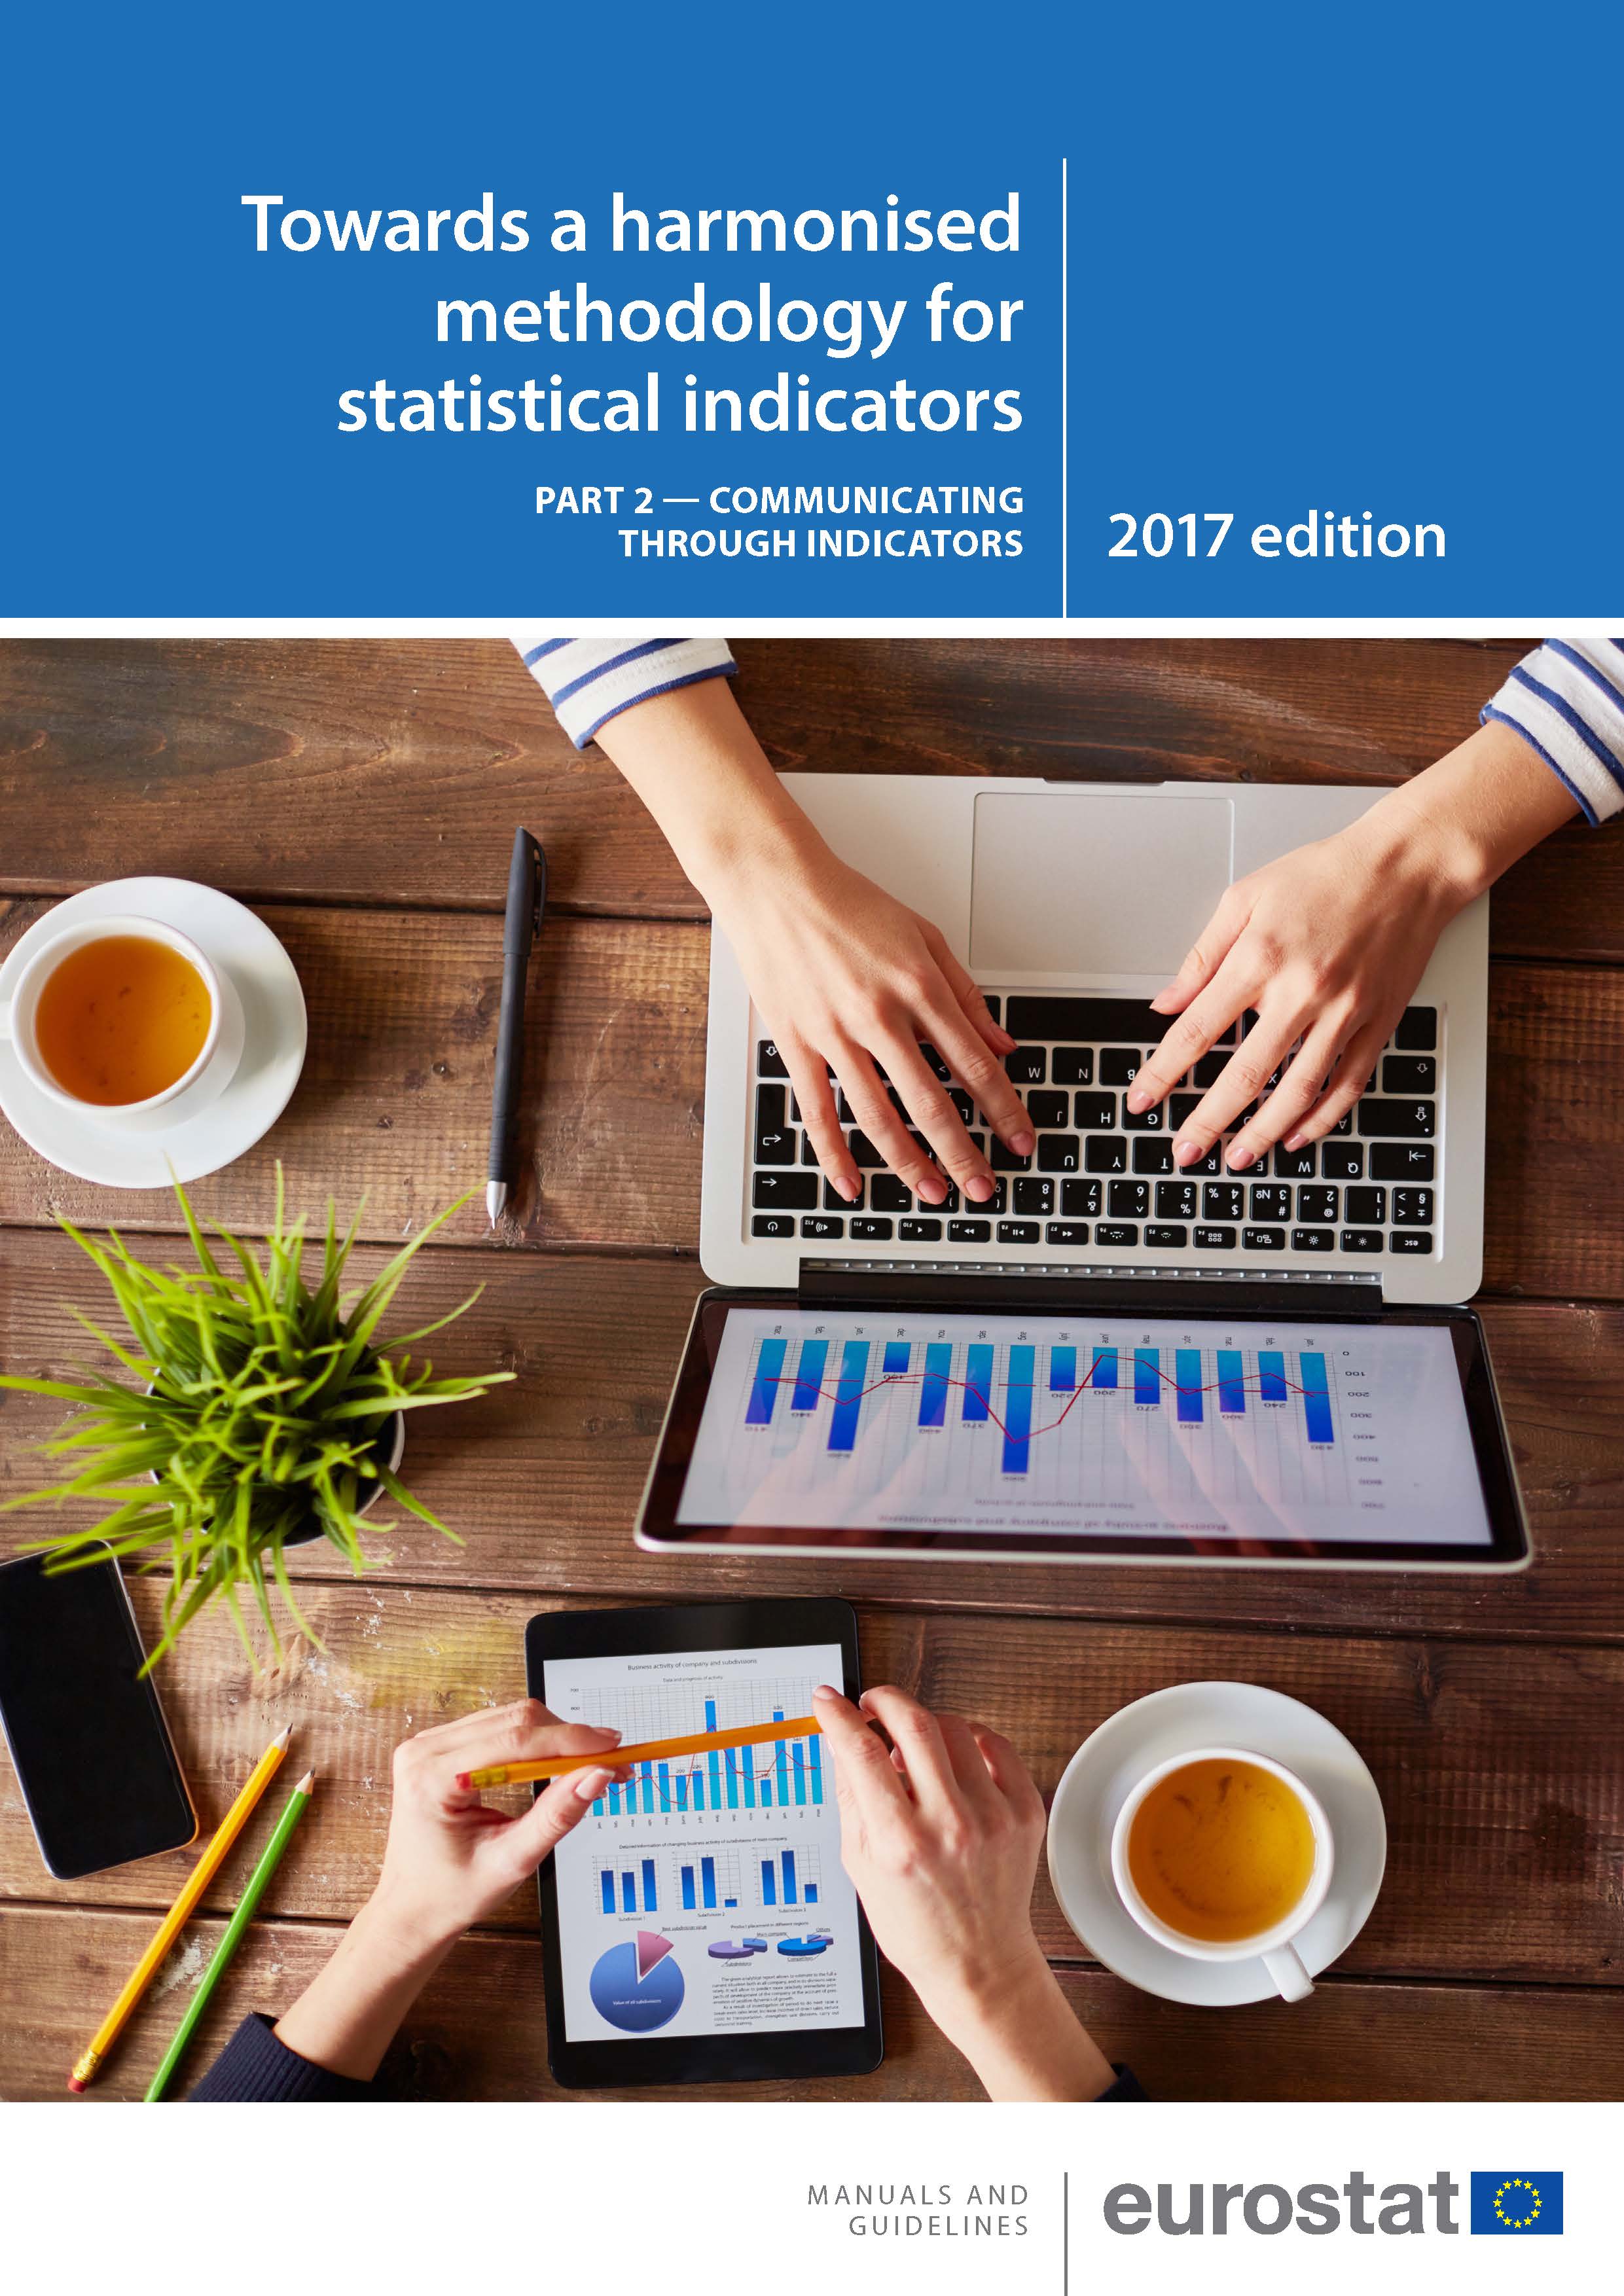 Towards a harmonised methodology for statistical indicators — Part 2: Communicating through indicators